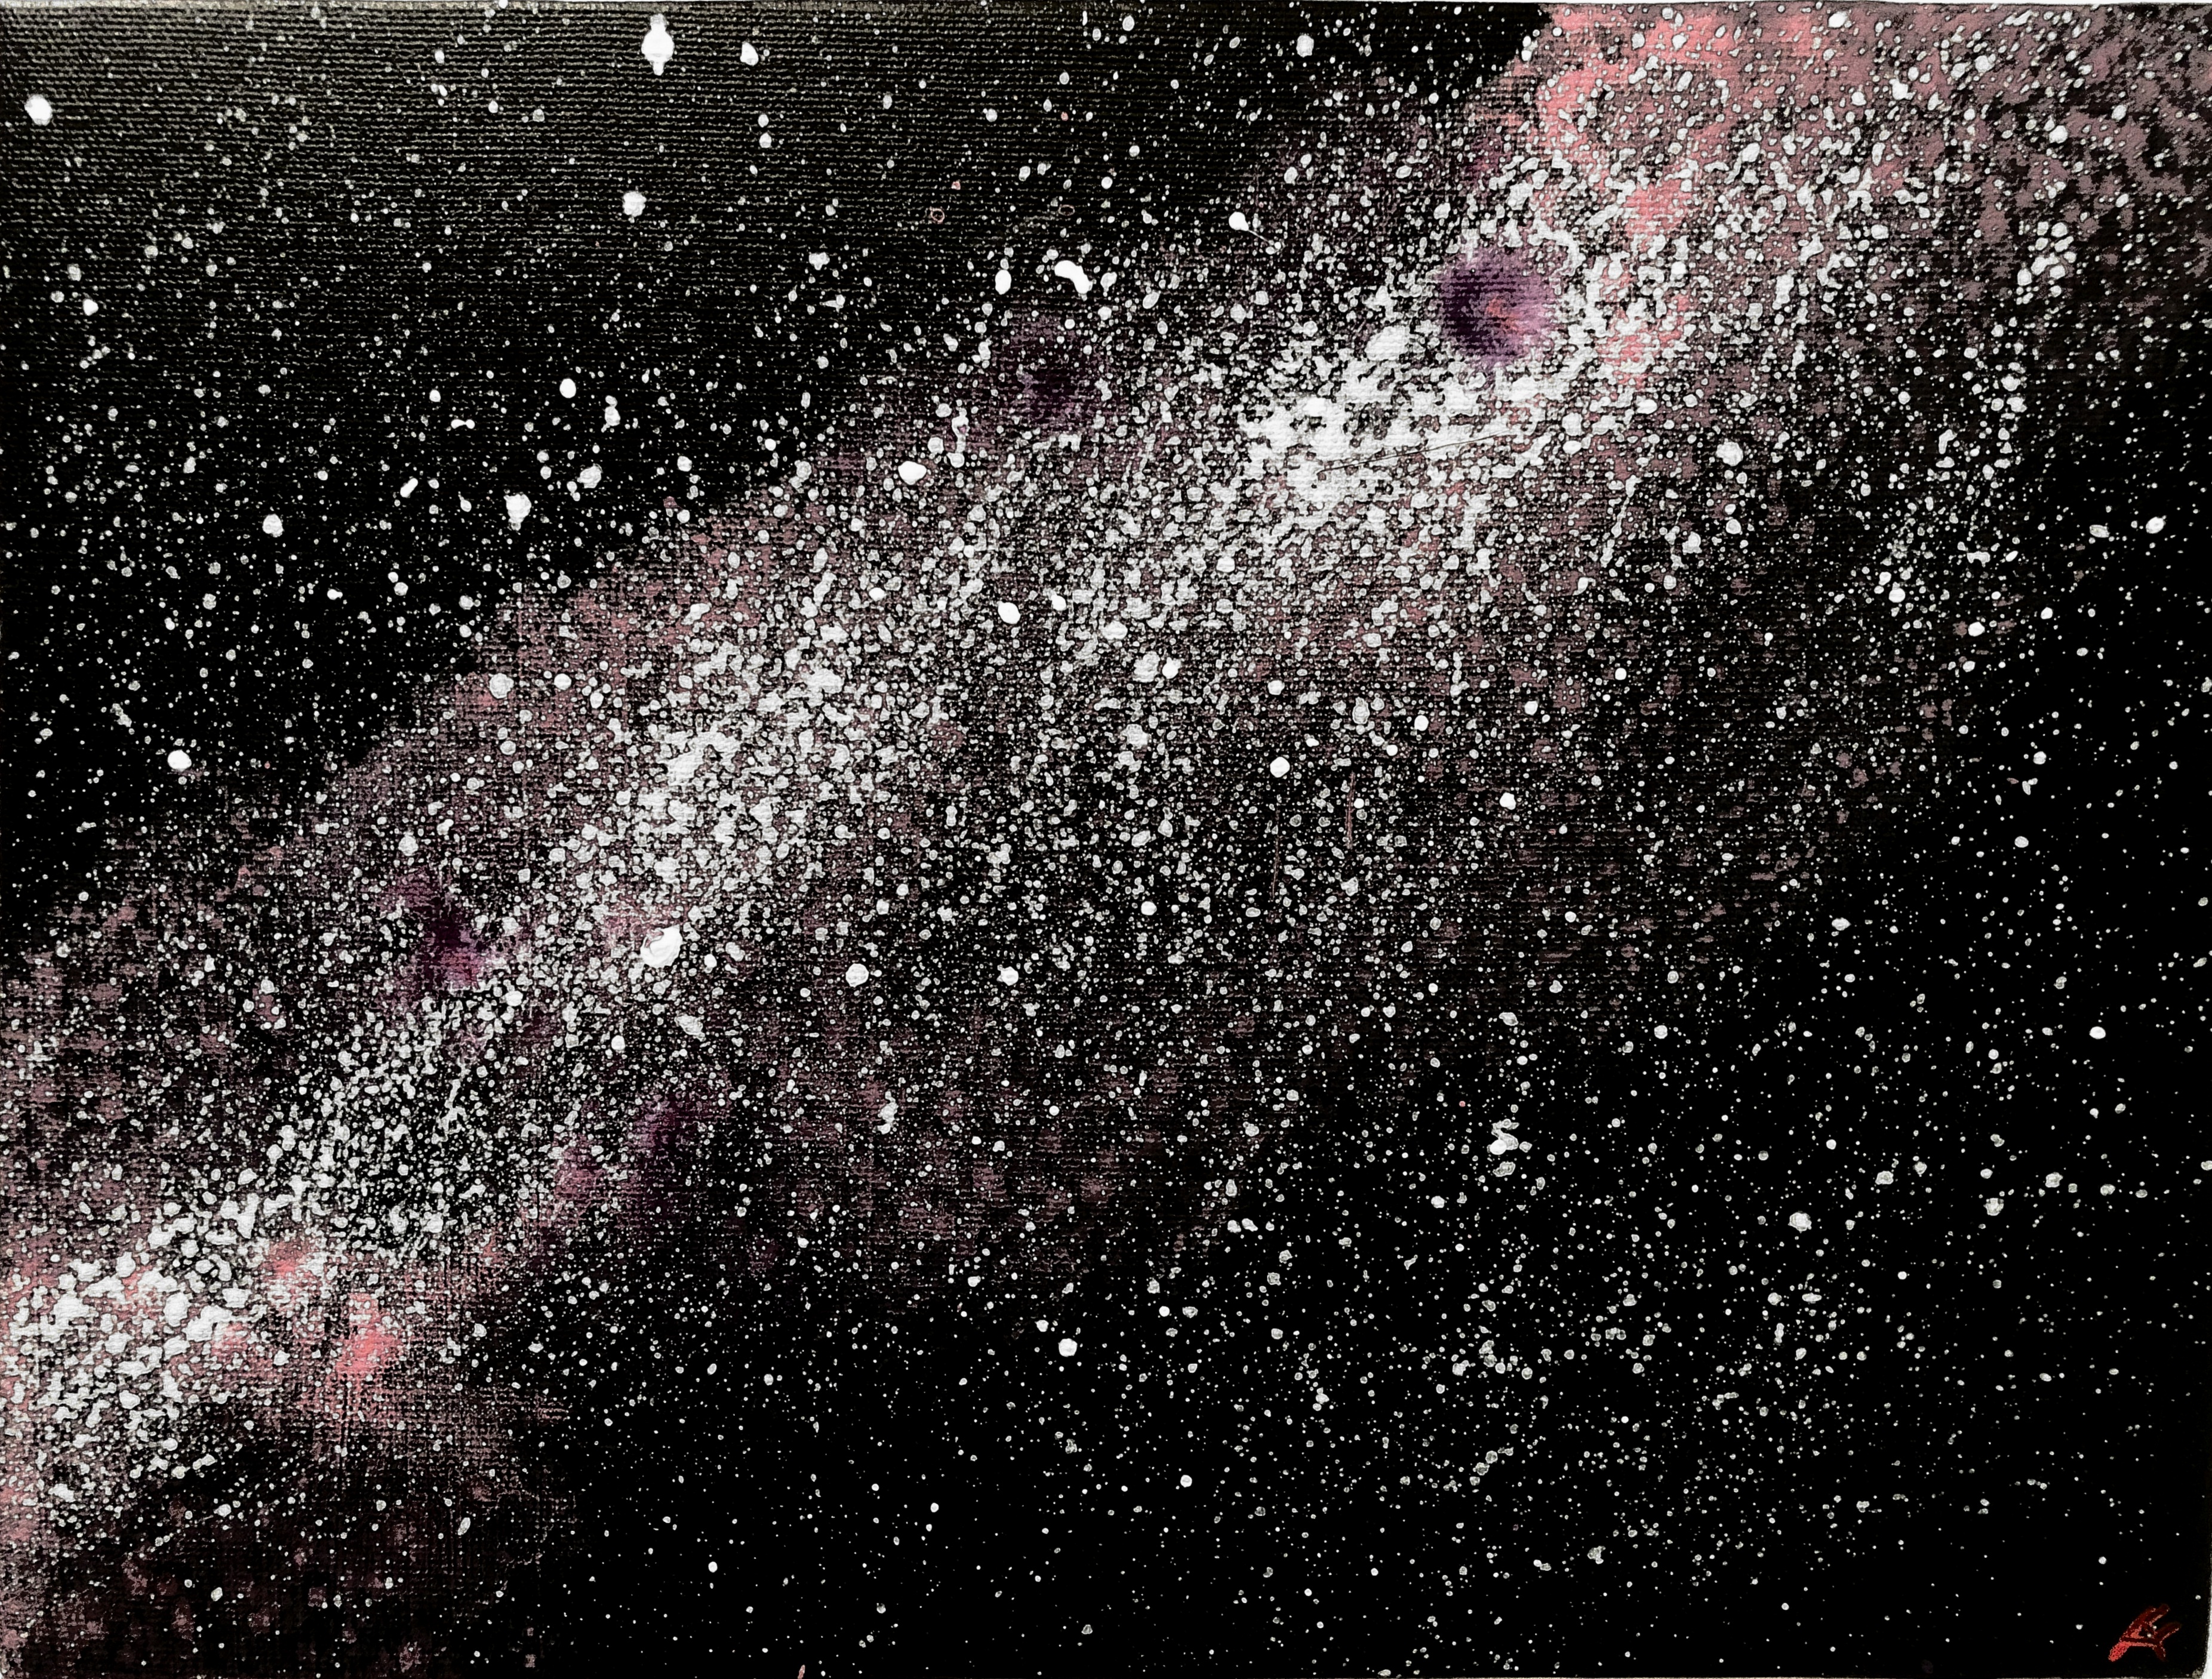 Galaxy Travel (2016). 8 x 10, acrylic on canvas.